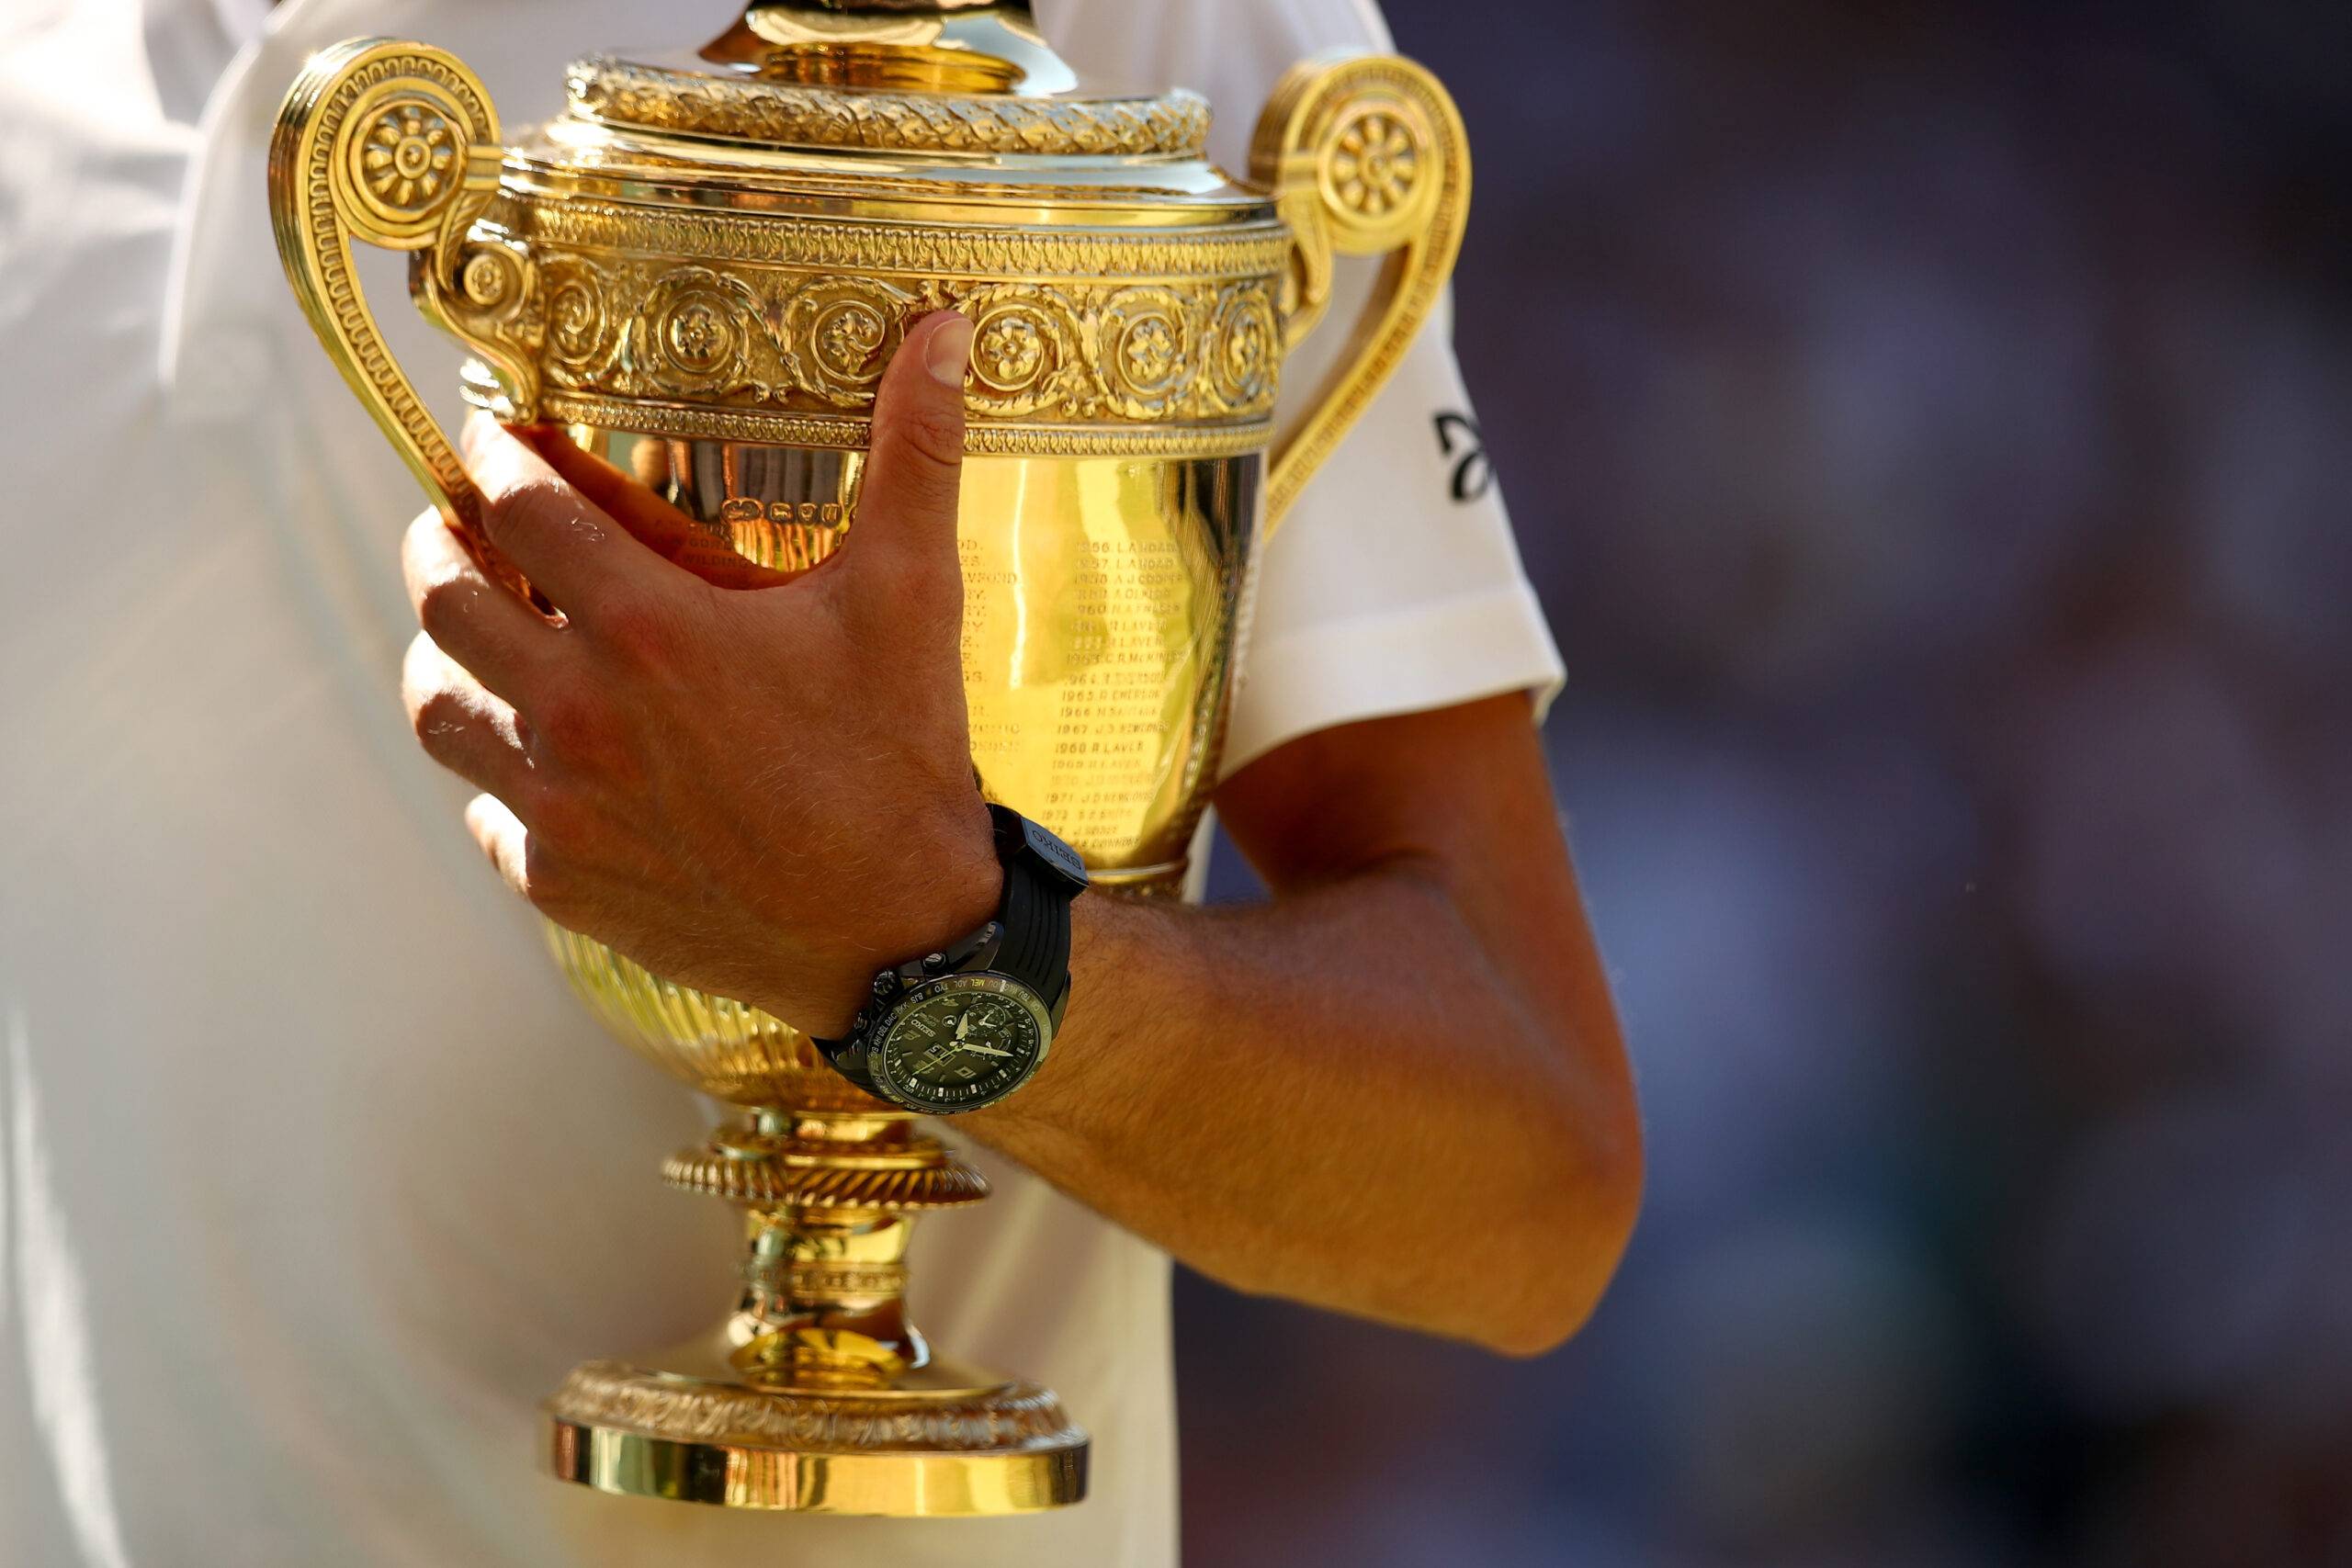 The Wimbledon trophy held by Novak Djokovic.